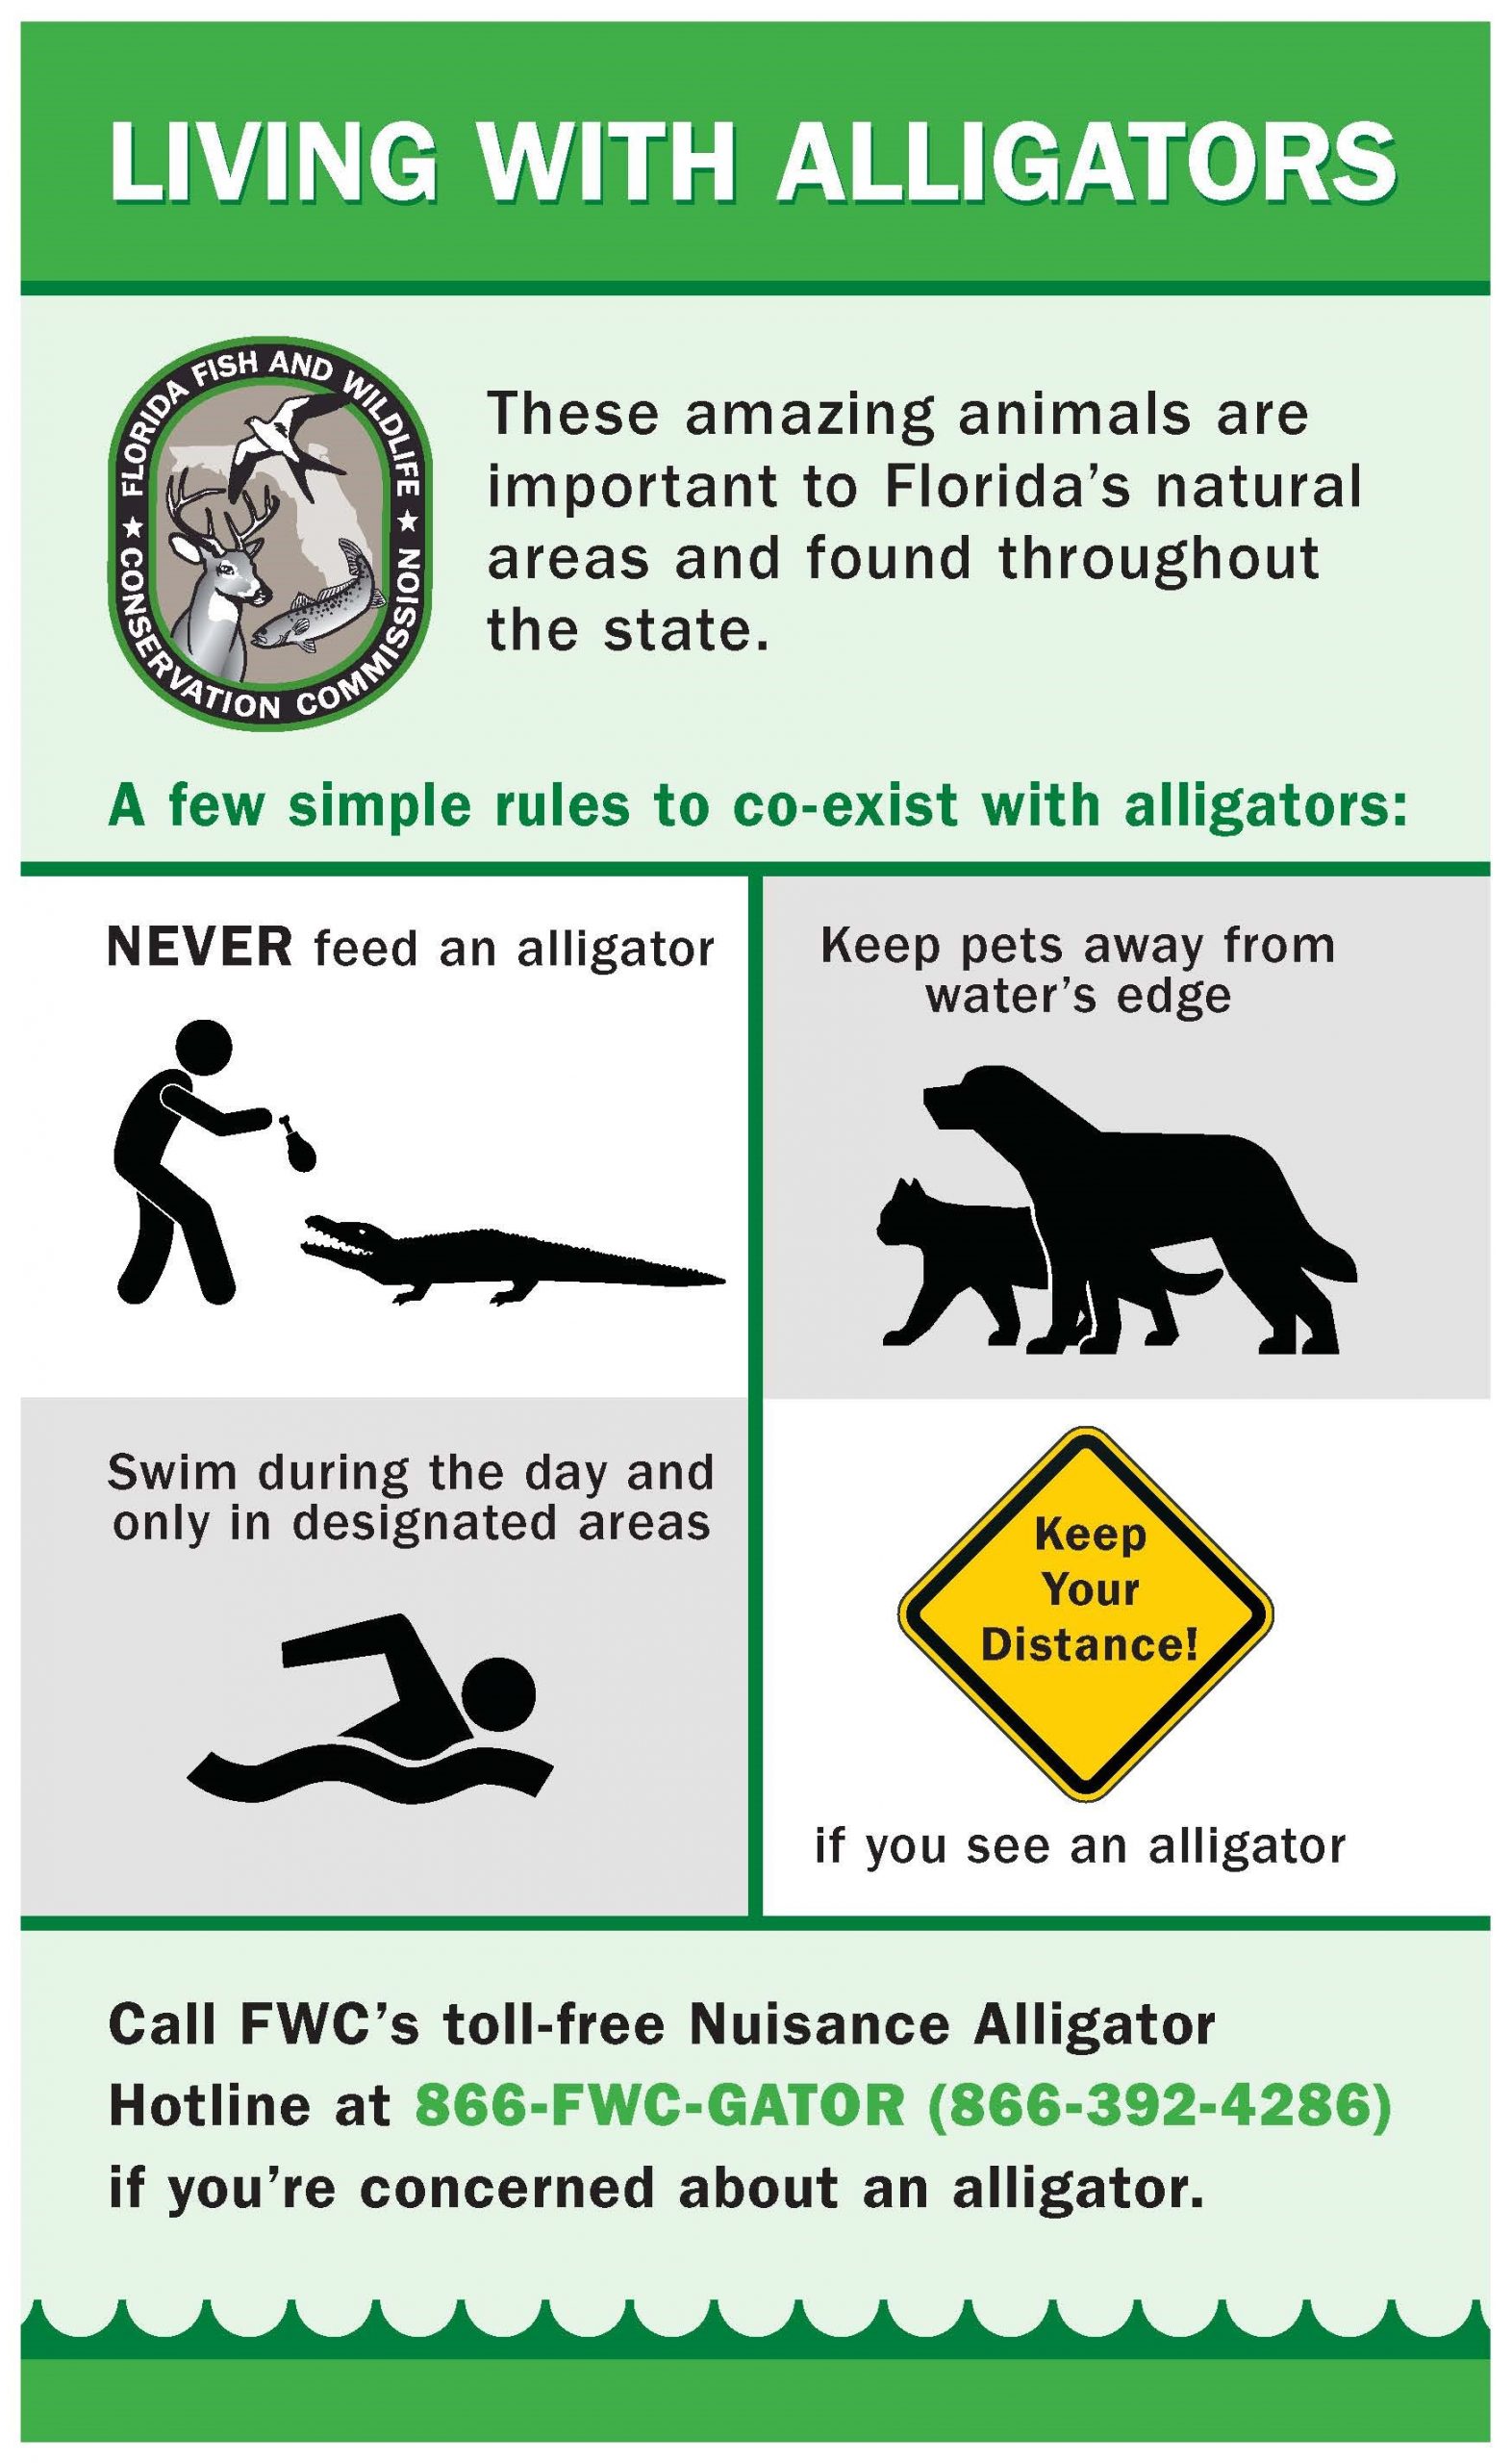 Living with Alligators